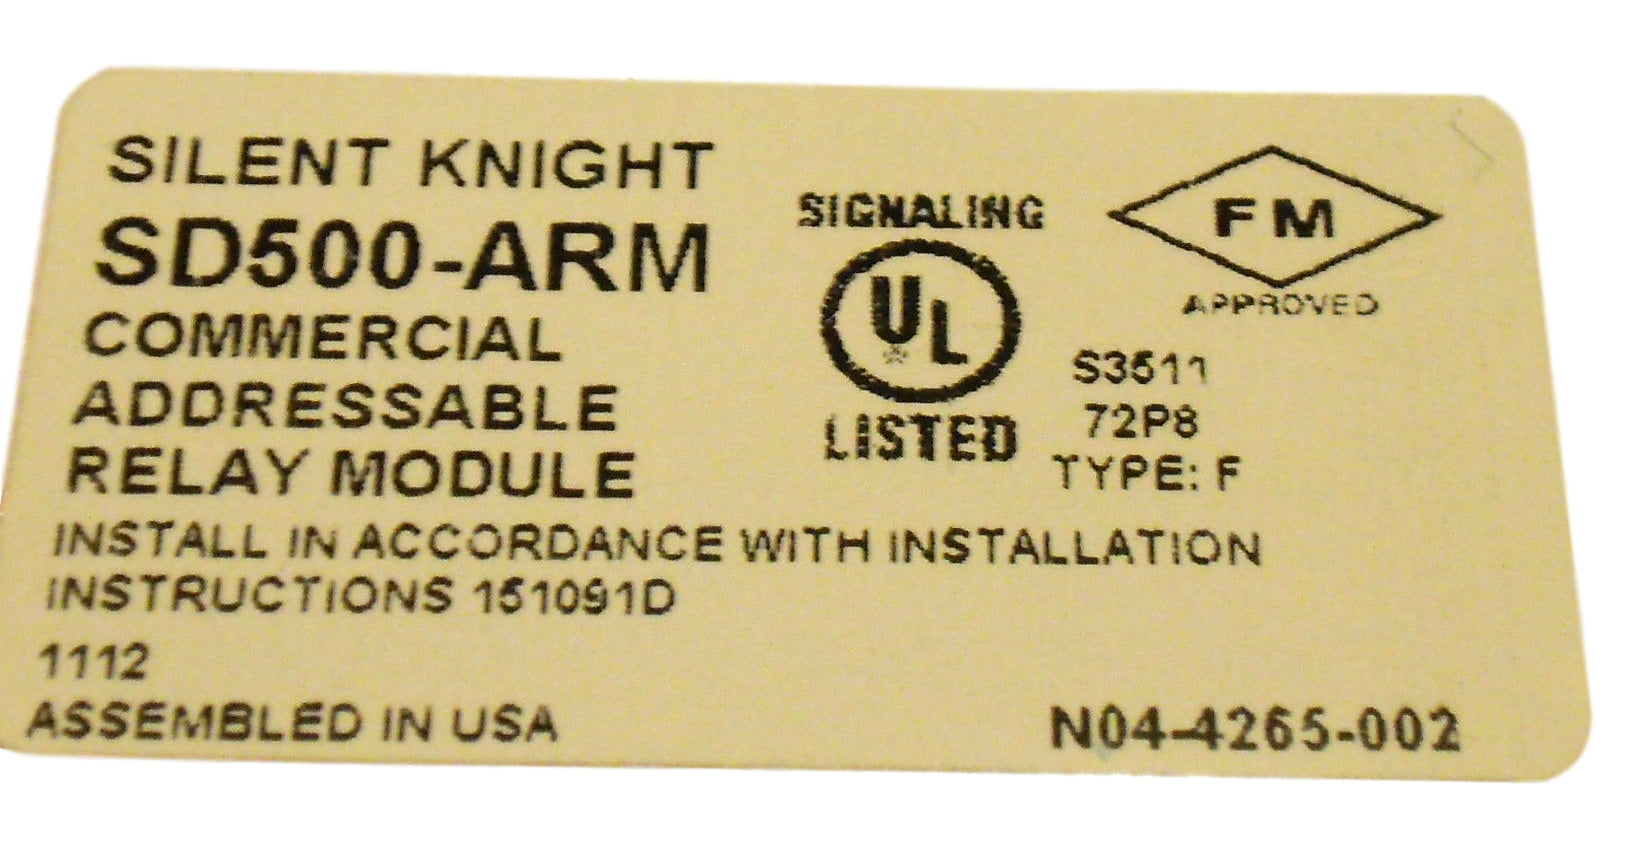 SILENT KNIGHT SD500-ARM ADDRESSABLE RELAY MODULE 